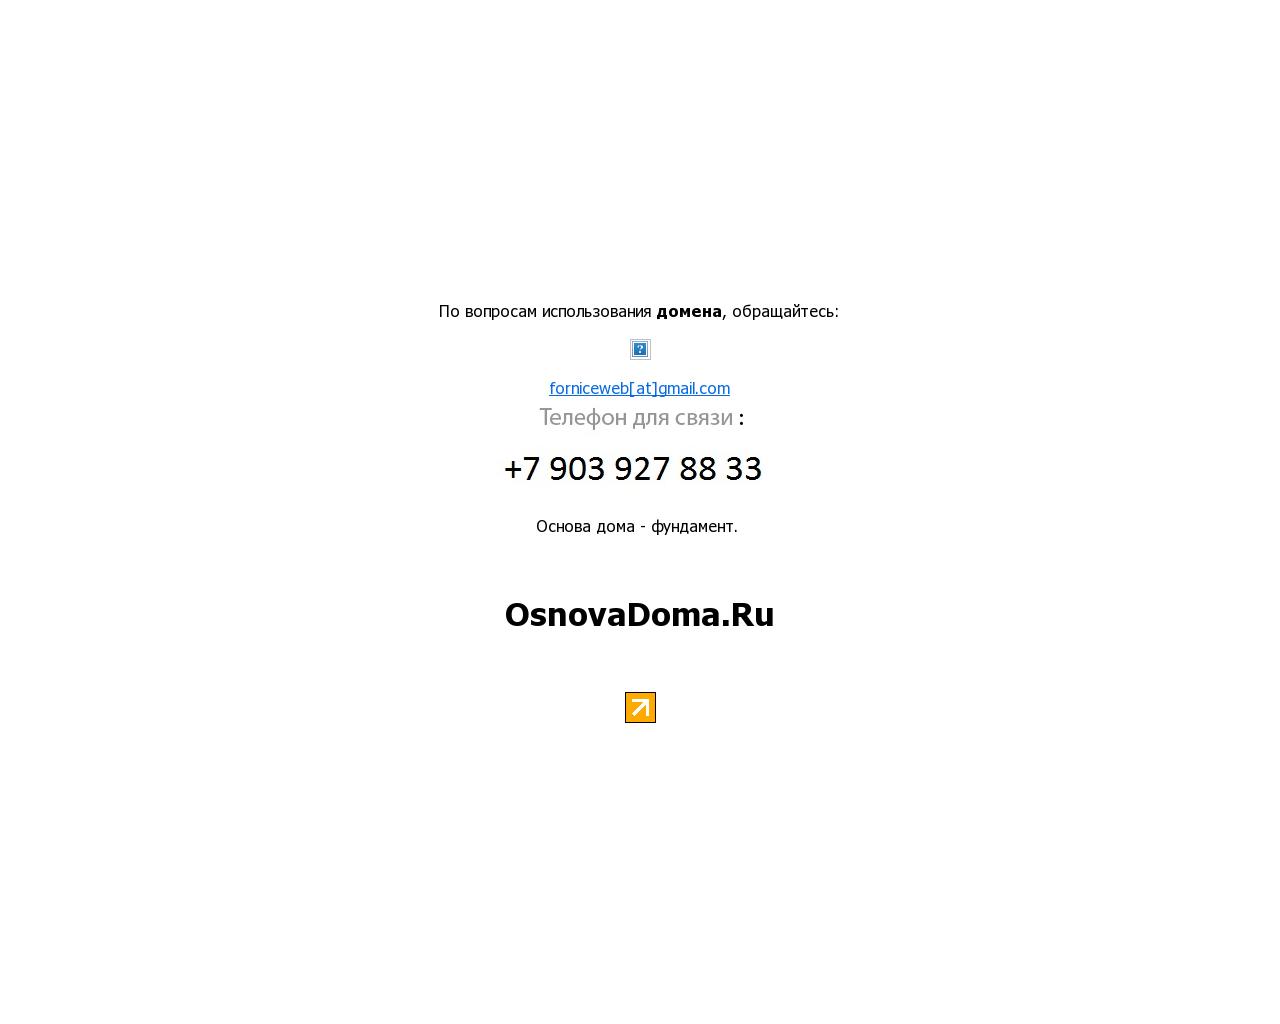 Изображение сайта osnovadoma.ru в разрешении 1280x1024